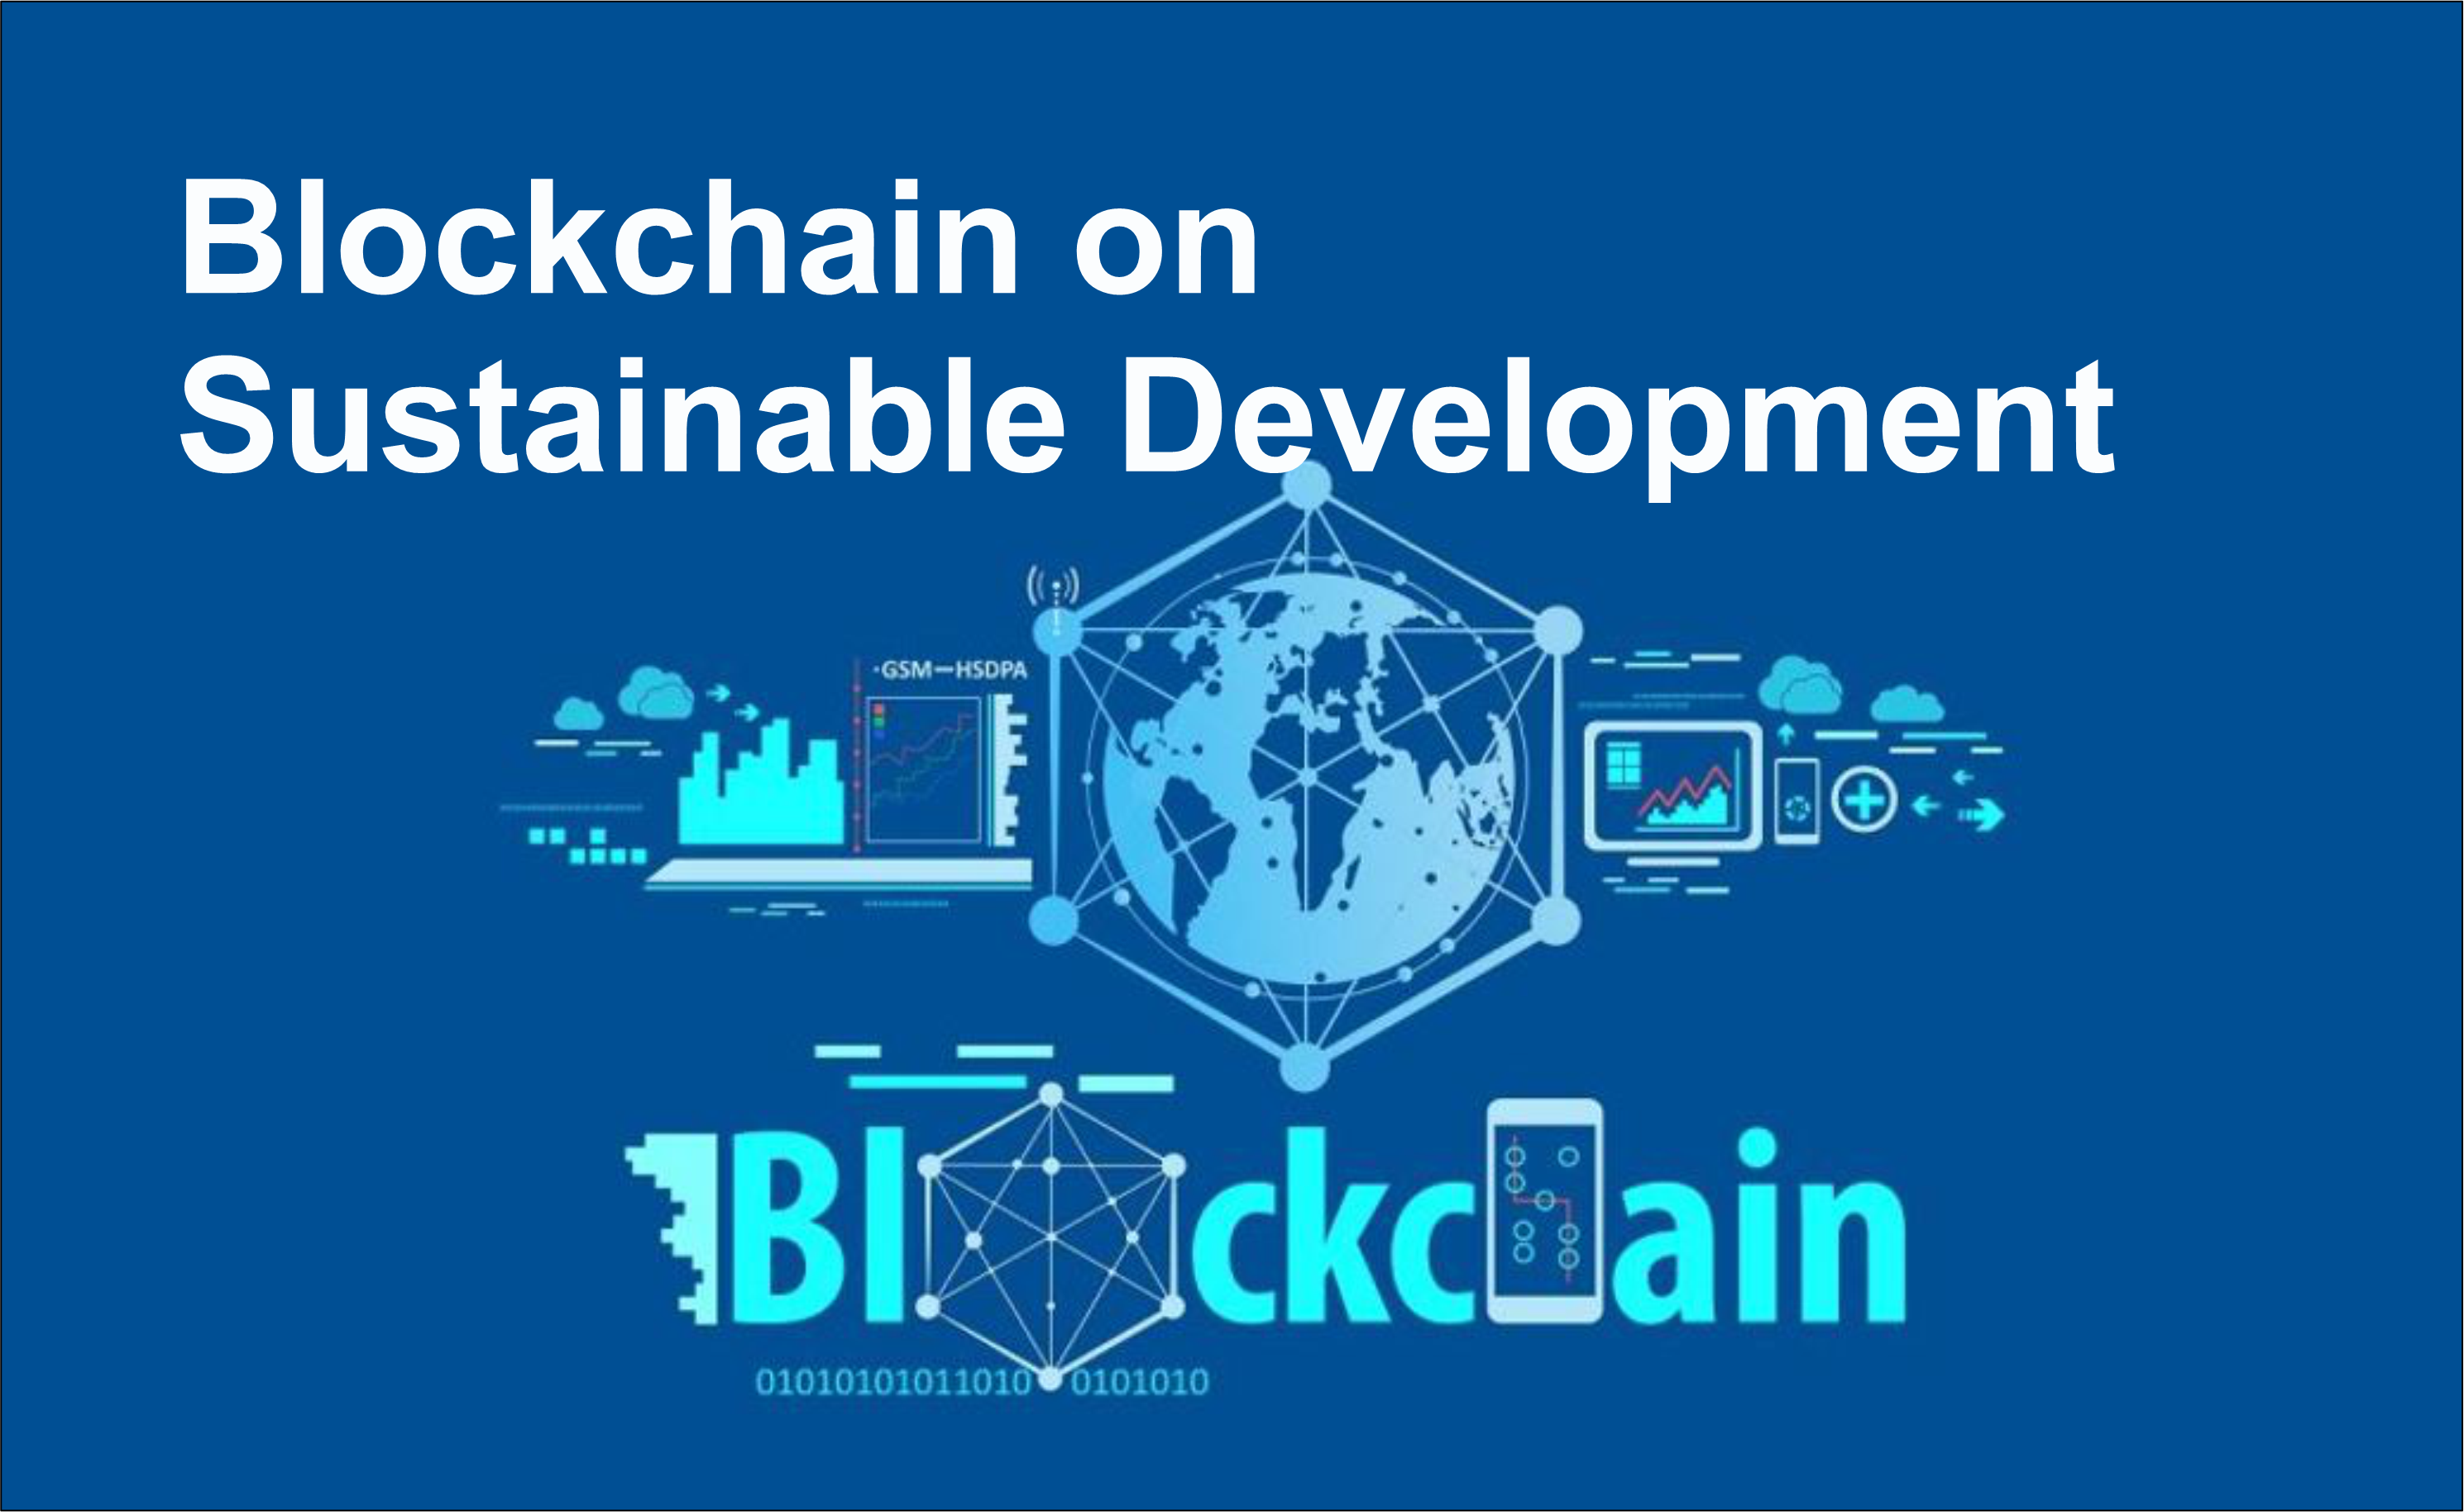 Impacts of Blockchain on Sustainable Development